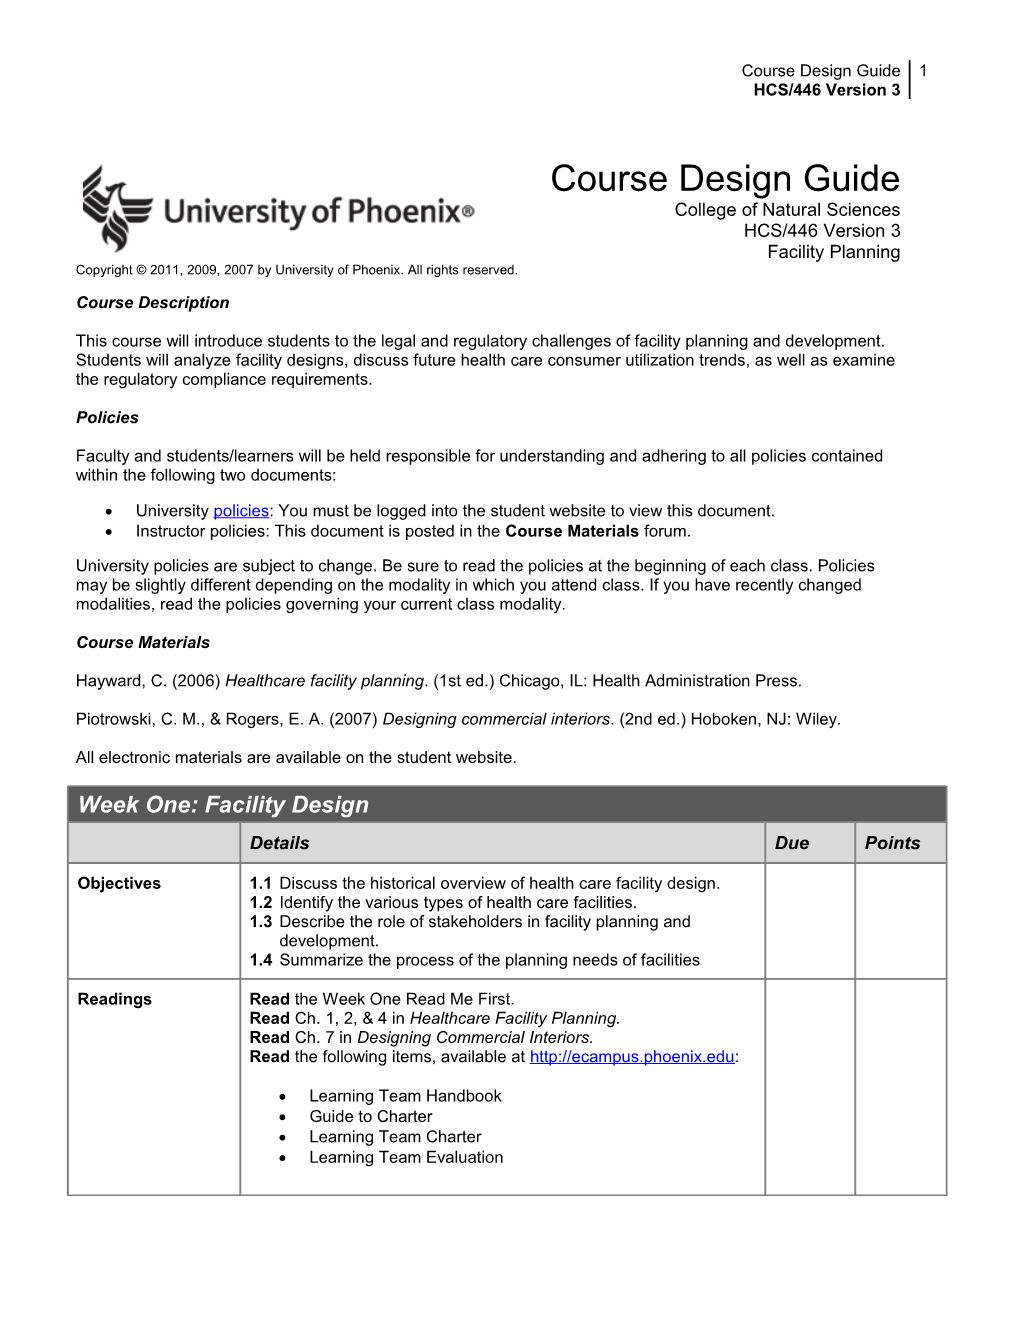 Course Design Guide (Tables Version)